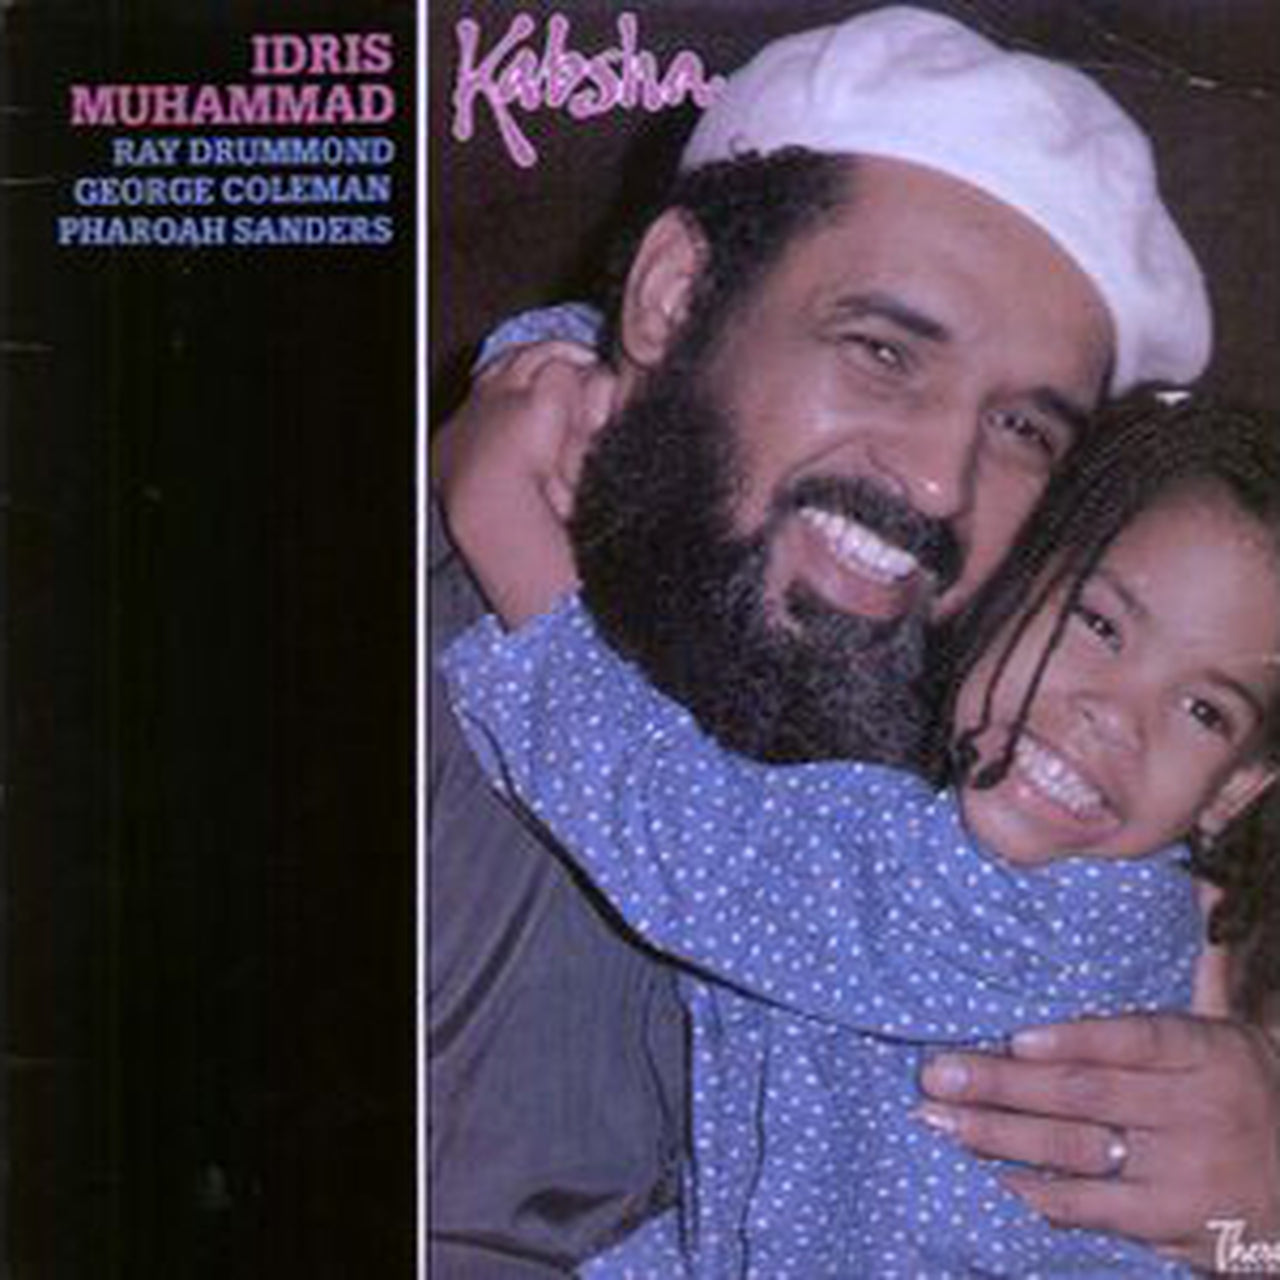 Idris Muhammad - Kabsha - Puro Placer LP